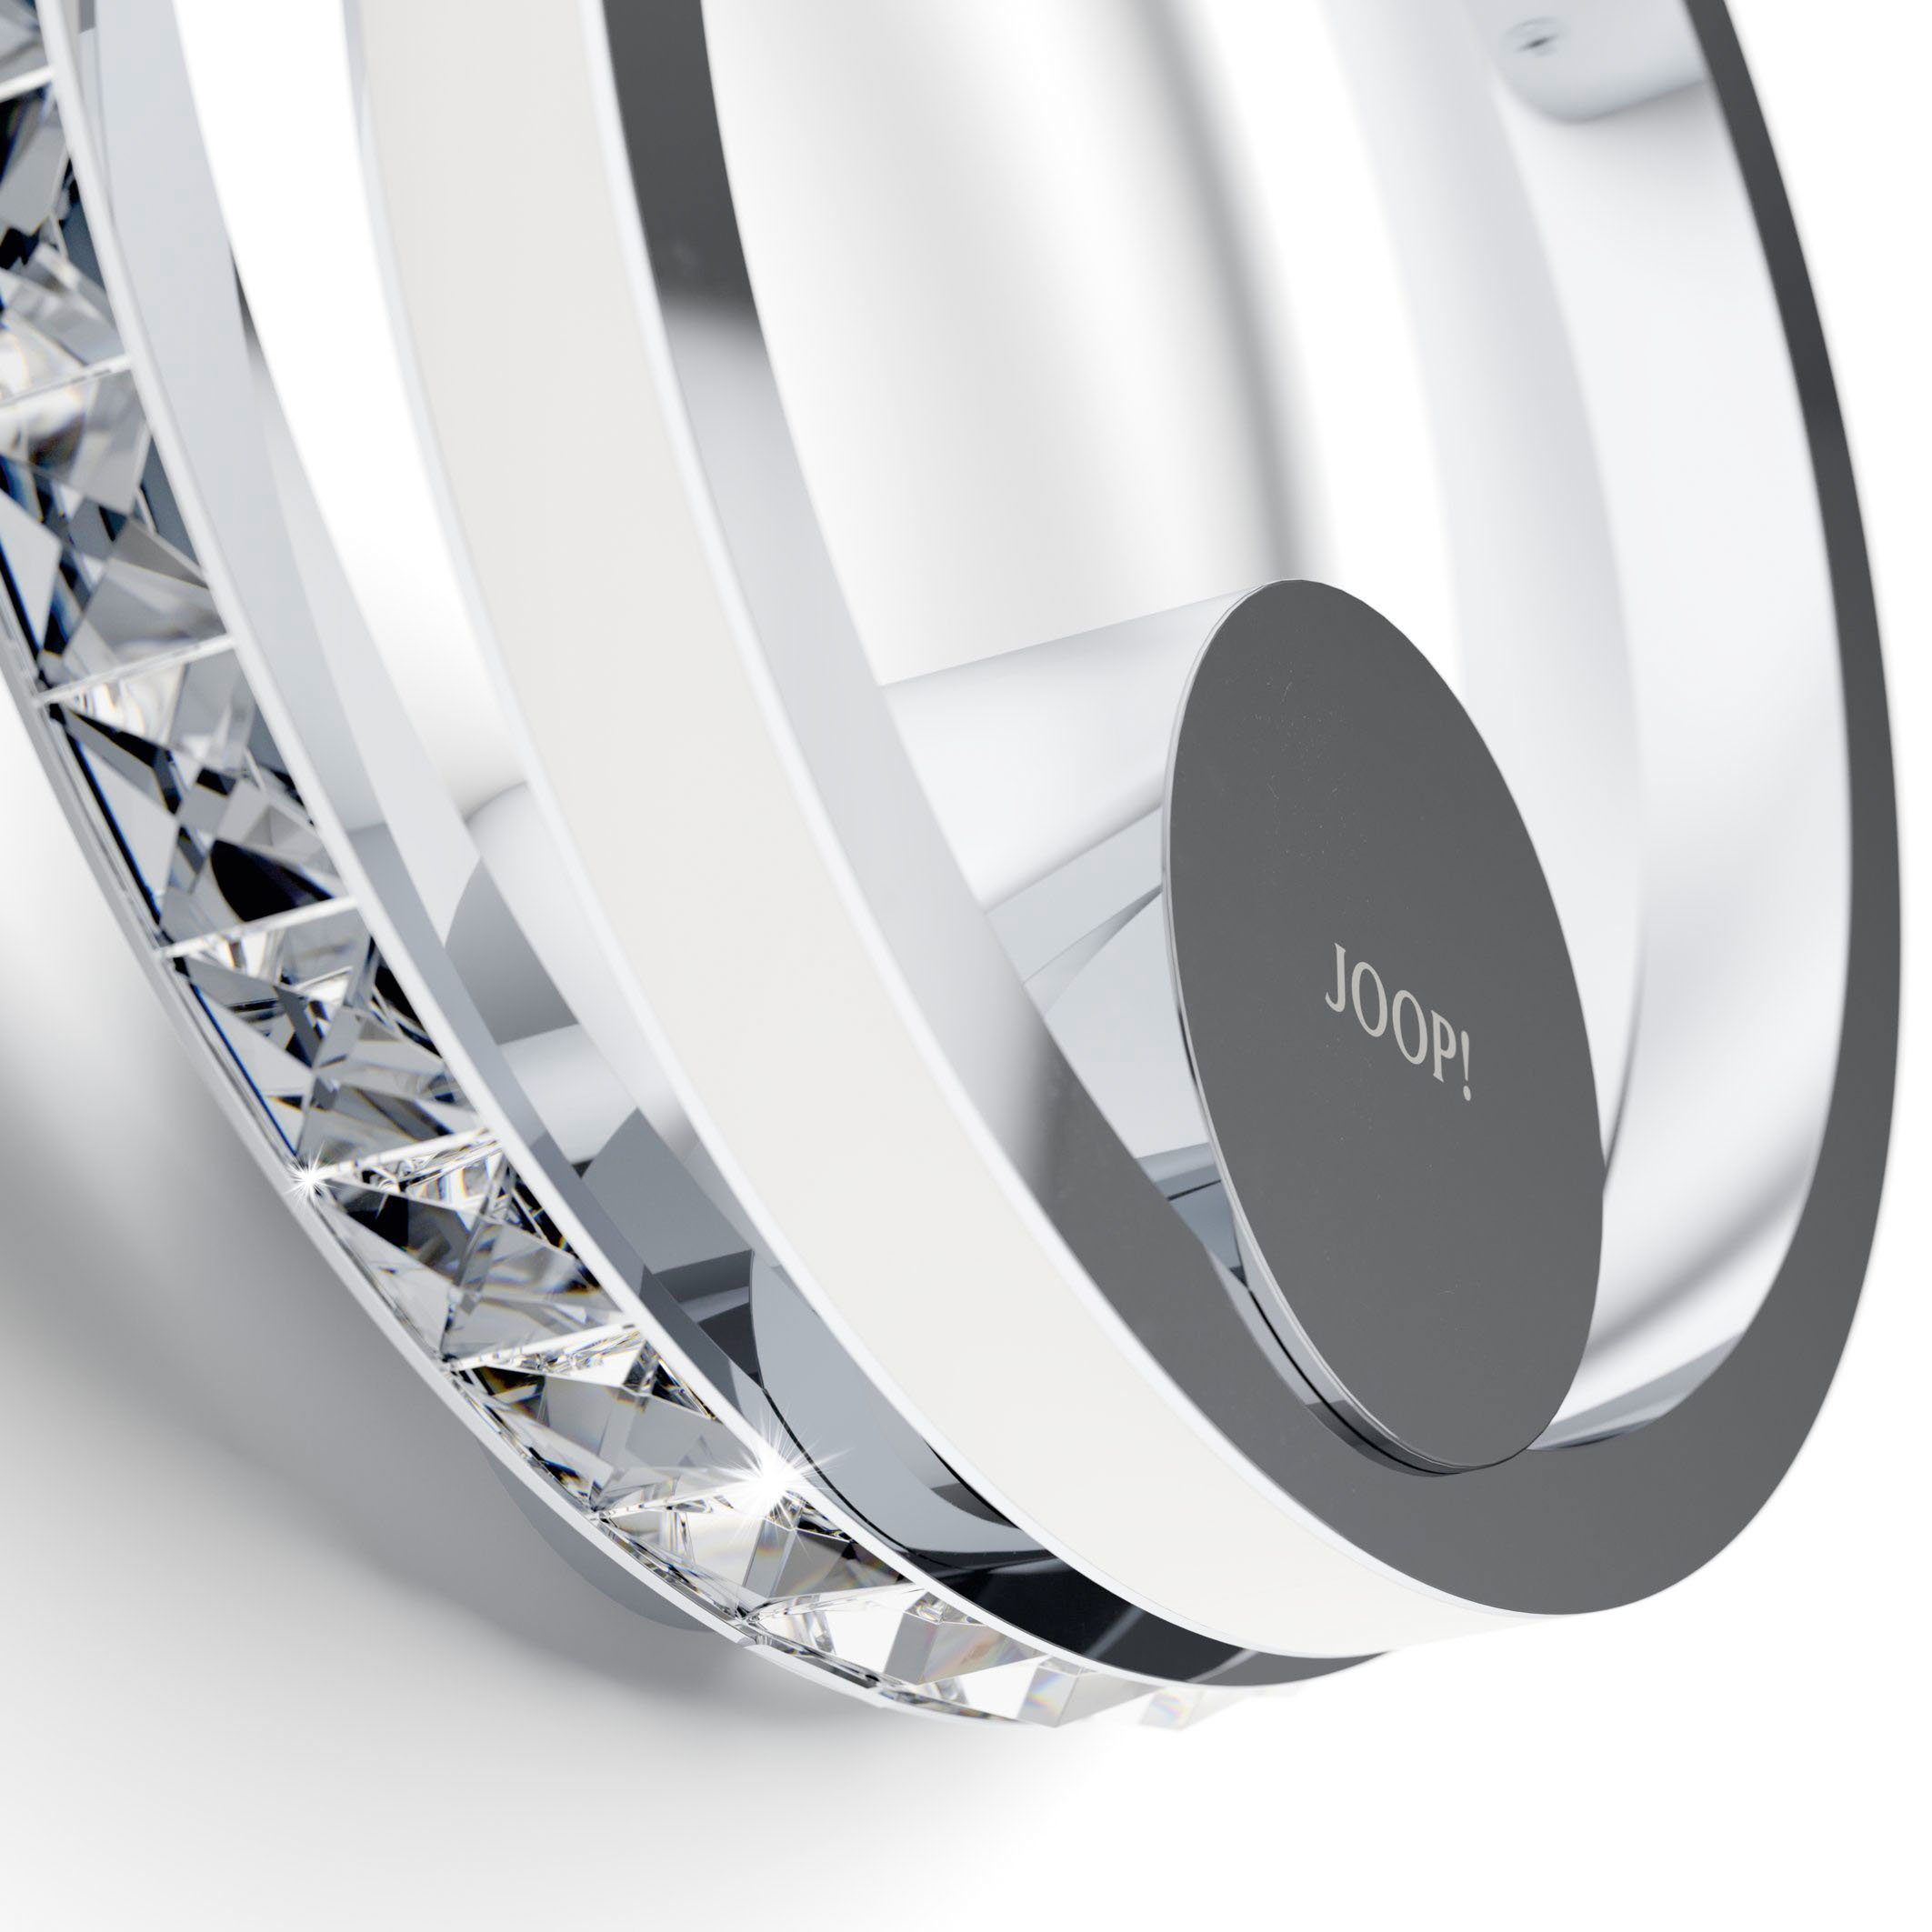 Joop! LED Wandleuchte JEWEL in LED Ringform Premium-LEDs mit in fest Wandleuchte integriert, Kristallglas-Optik LIGHTS, Dimmfunktion, Warmweiß